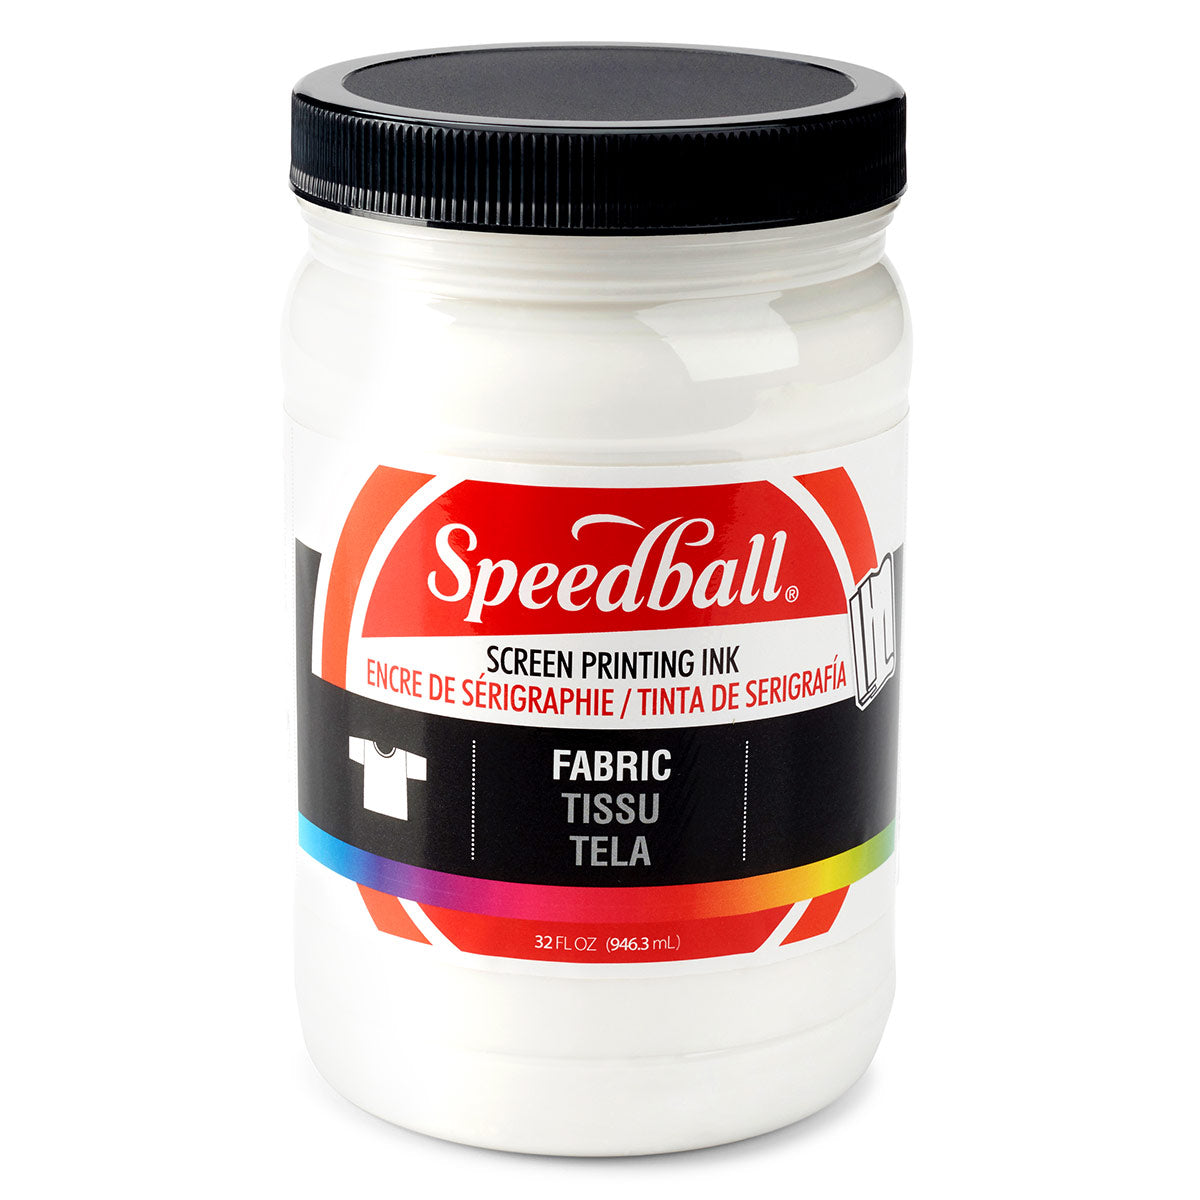 Speedball-Encre de sérigraphie textile 946ml (32oz) -Blanc